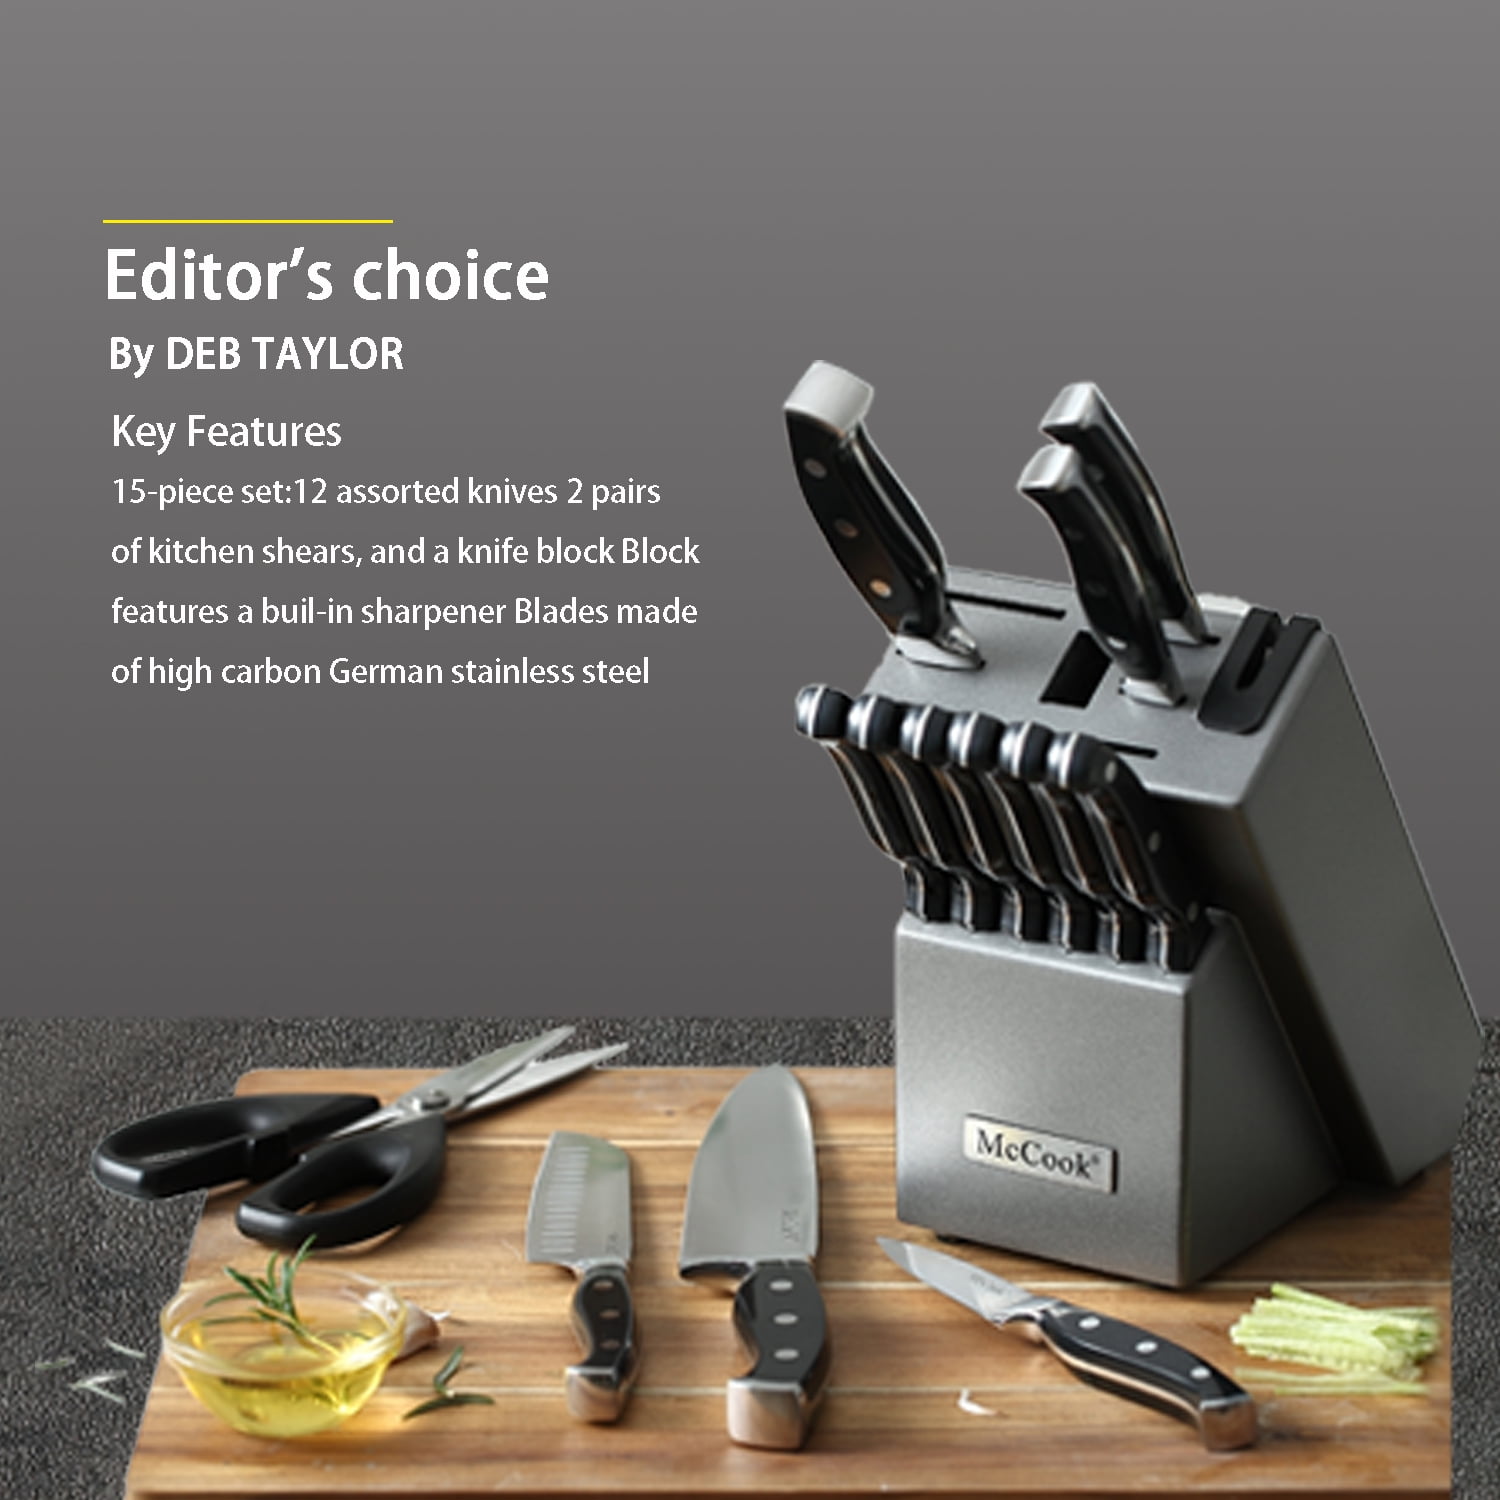 McCook MC29 15-Piece Kitchen Cutlery Knife Block Set Built-in Sharpener  Stainless Steel